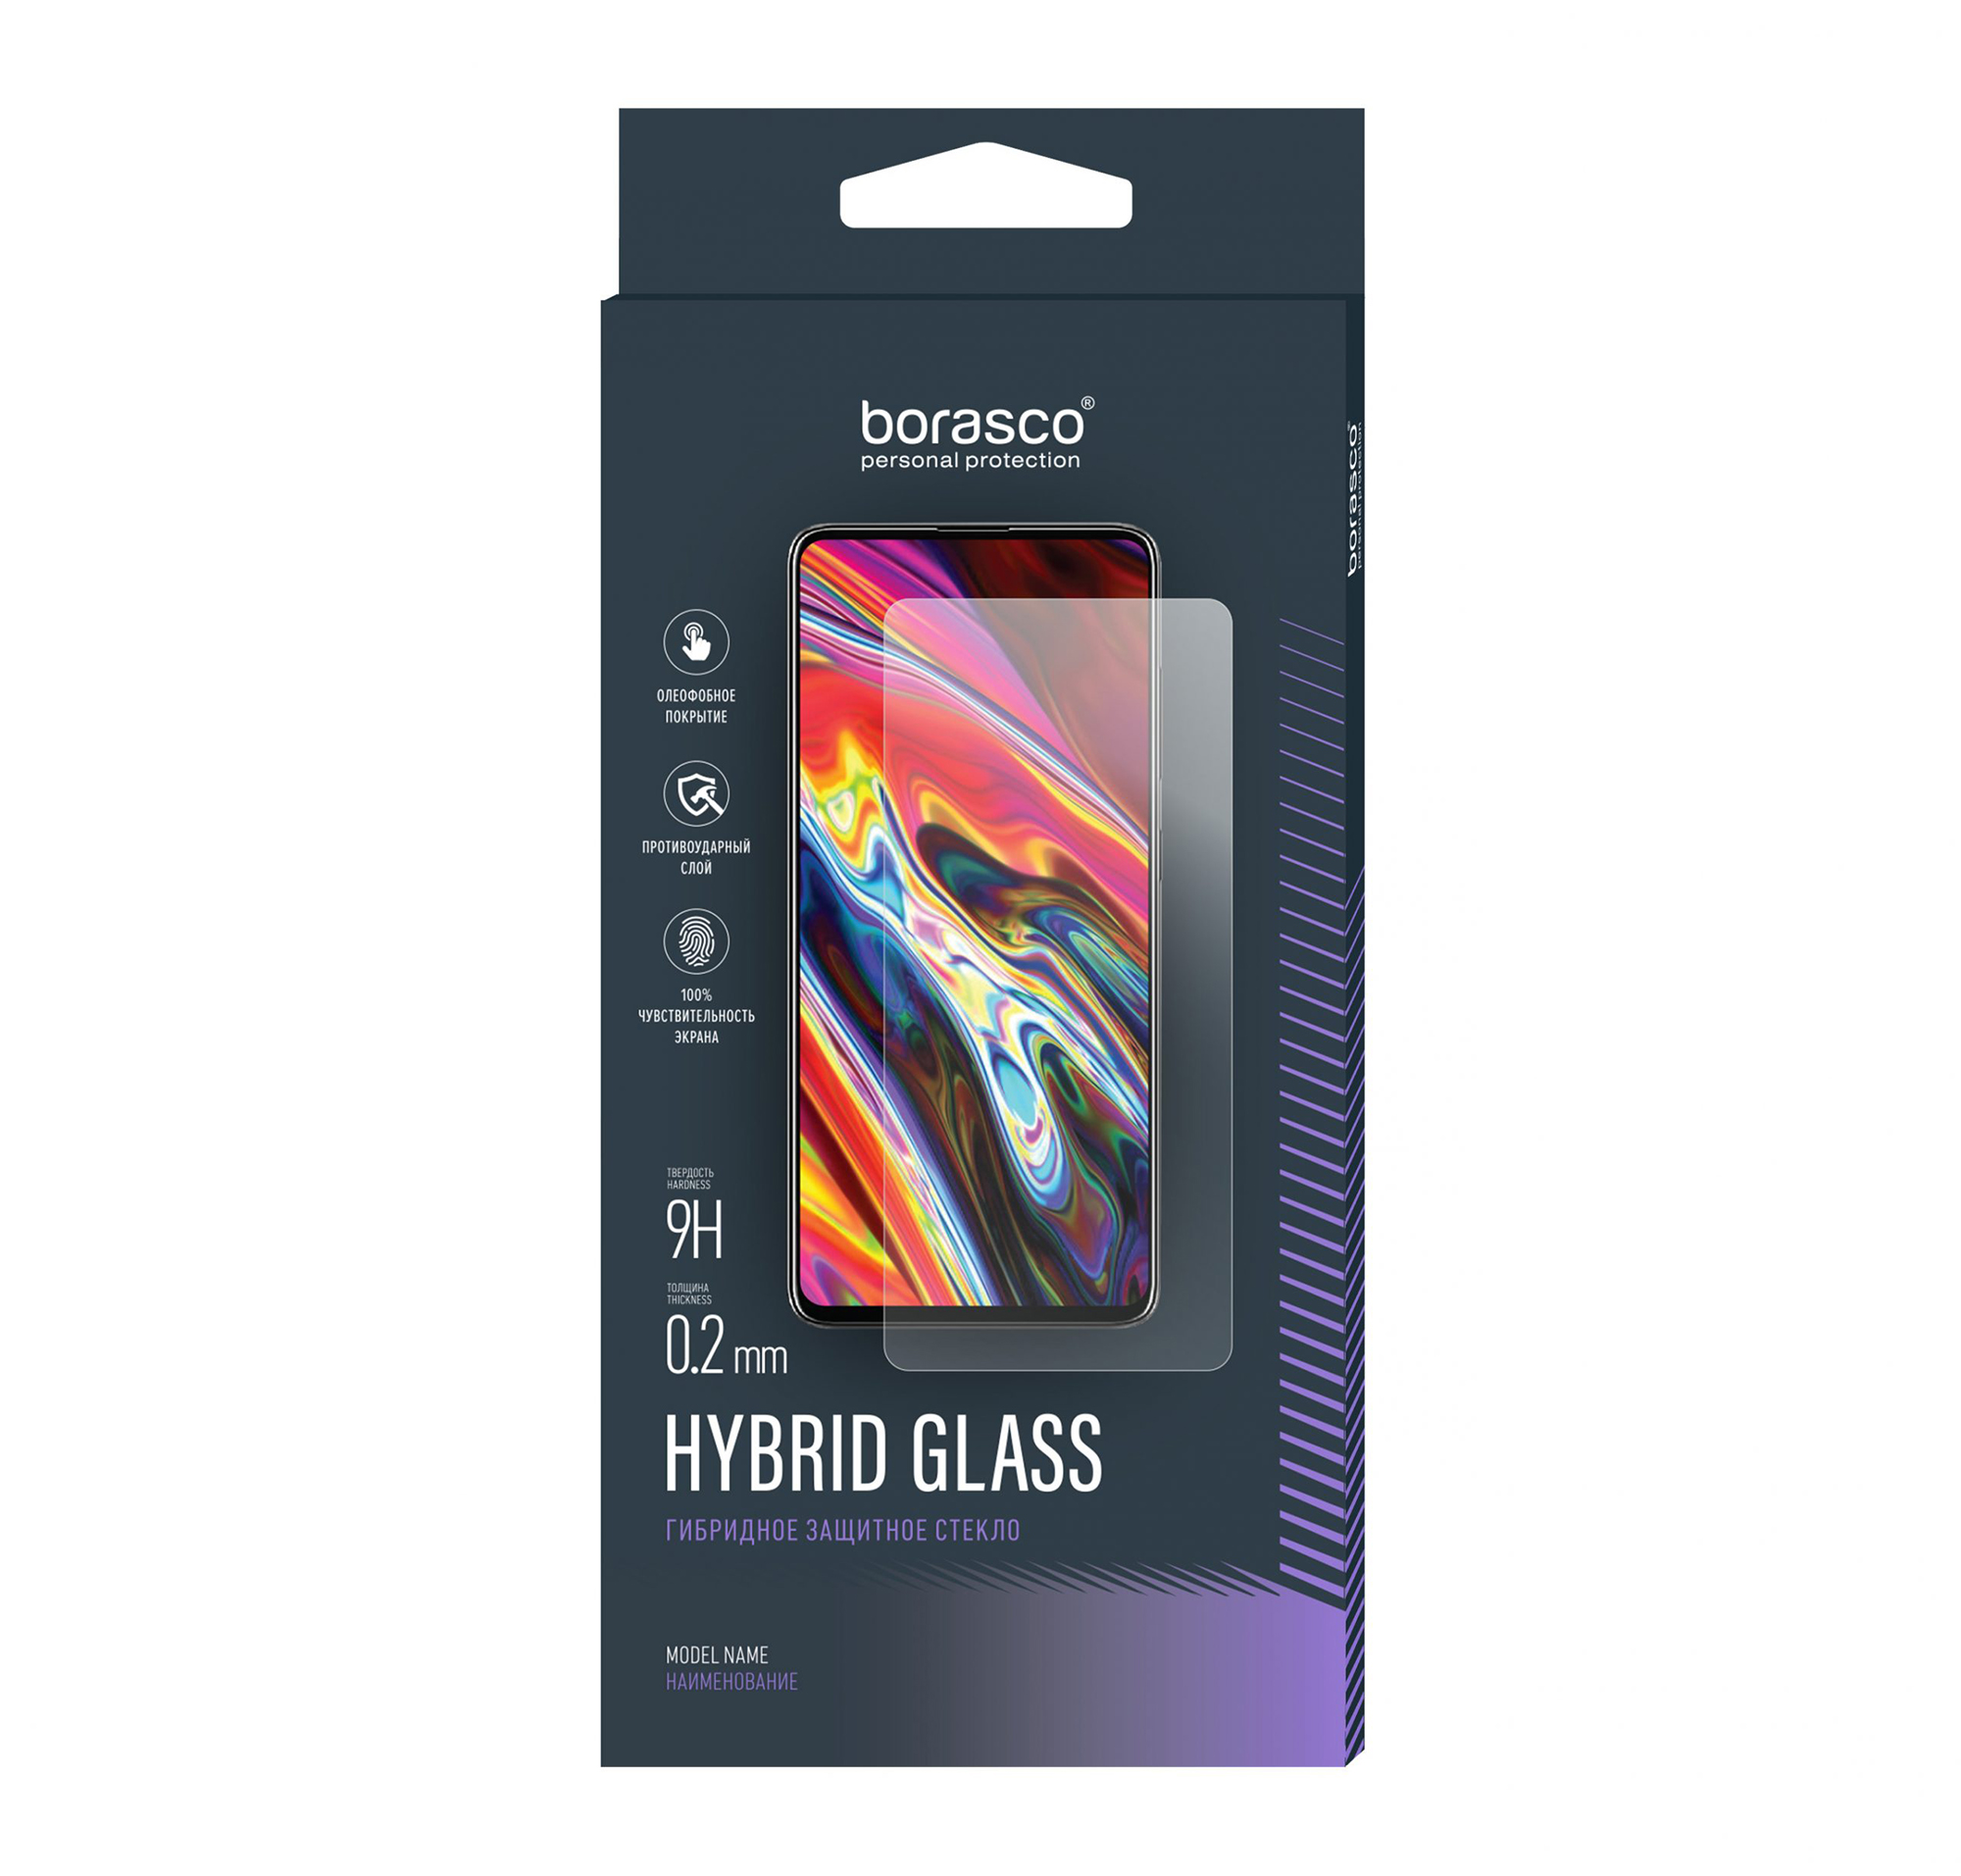 Защитное стекло Hybrid Glass для Apple iPhone 12 mini защитное стекло для камеры hybrid glass для apple iphone 11 12 12 mini